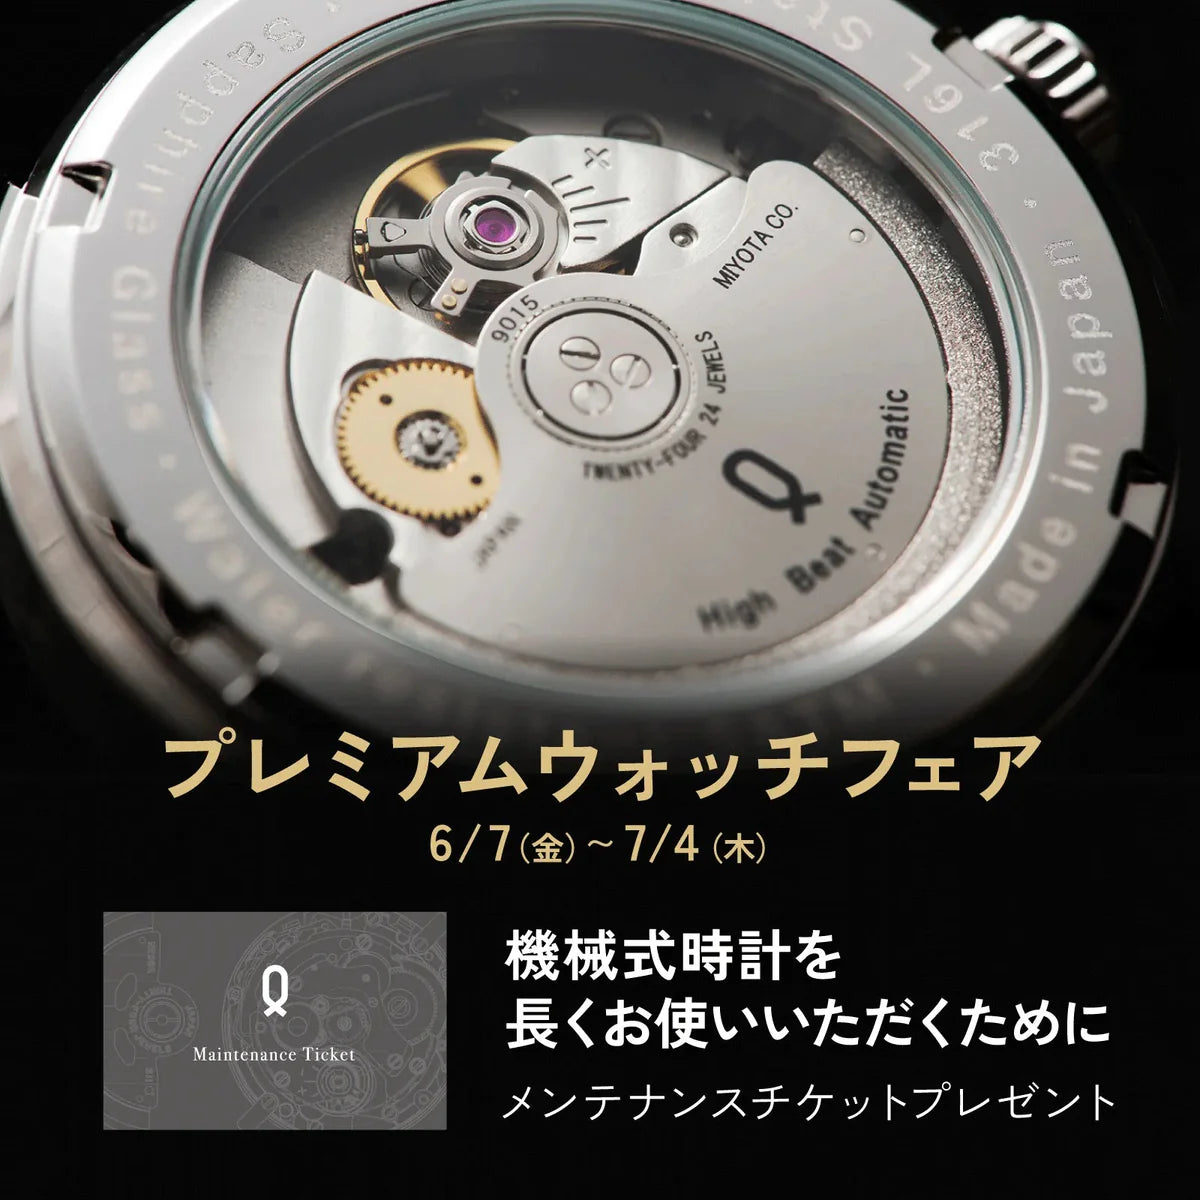 Knot AT-38SVBK_LD-16SVSV-AT-38 機械式腕時計 メンズ 自動巻き ブラック 日本製 38mm シンプル ベルトセット –  Maker's Watch Knot